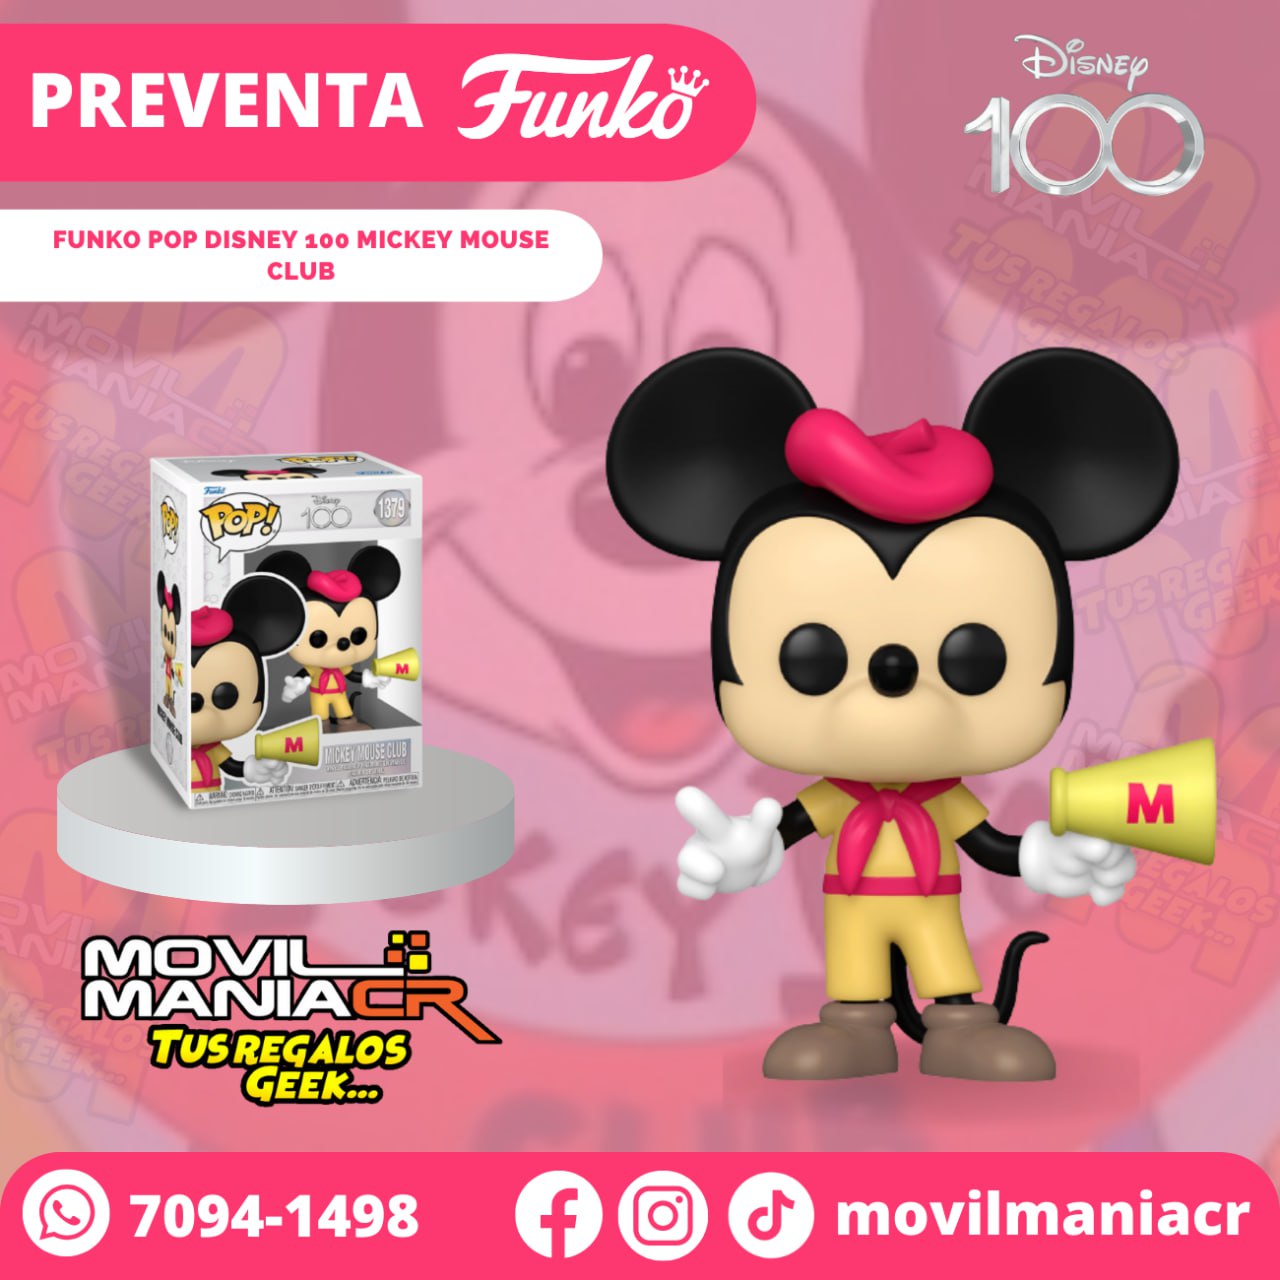 Preventa Funko Pop Disney 100 Mickey Mouse Club #1379